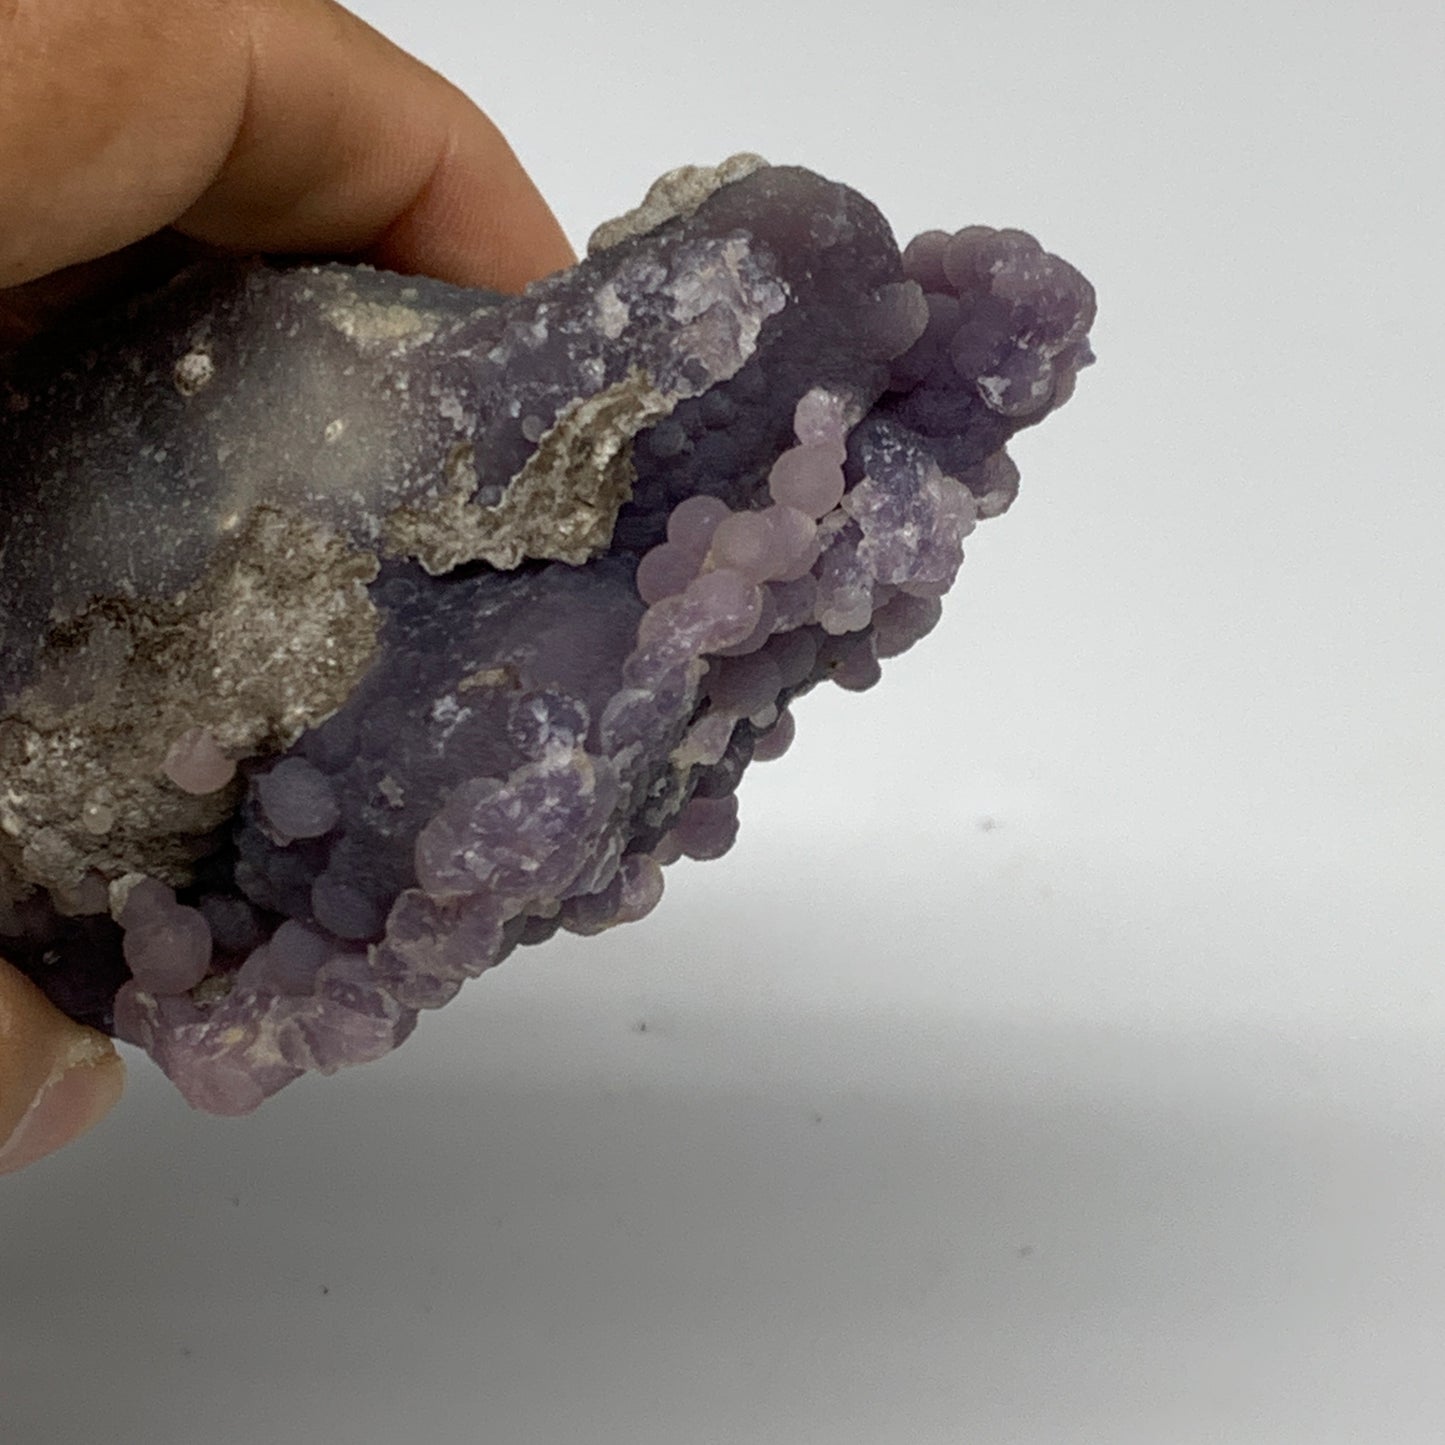 0.69 lbs, 4.4"x2.2"x1.8", Natural Rough Grape Agate Crystal Mineral Specimens, B